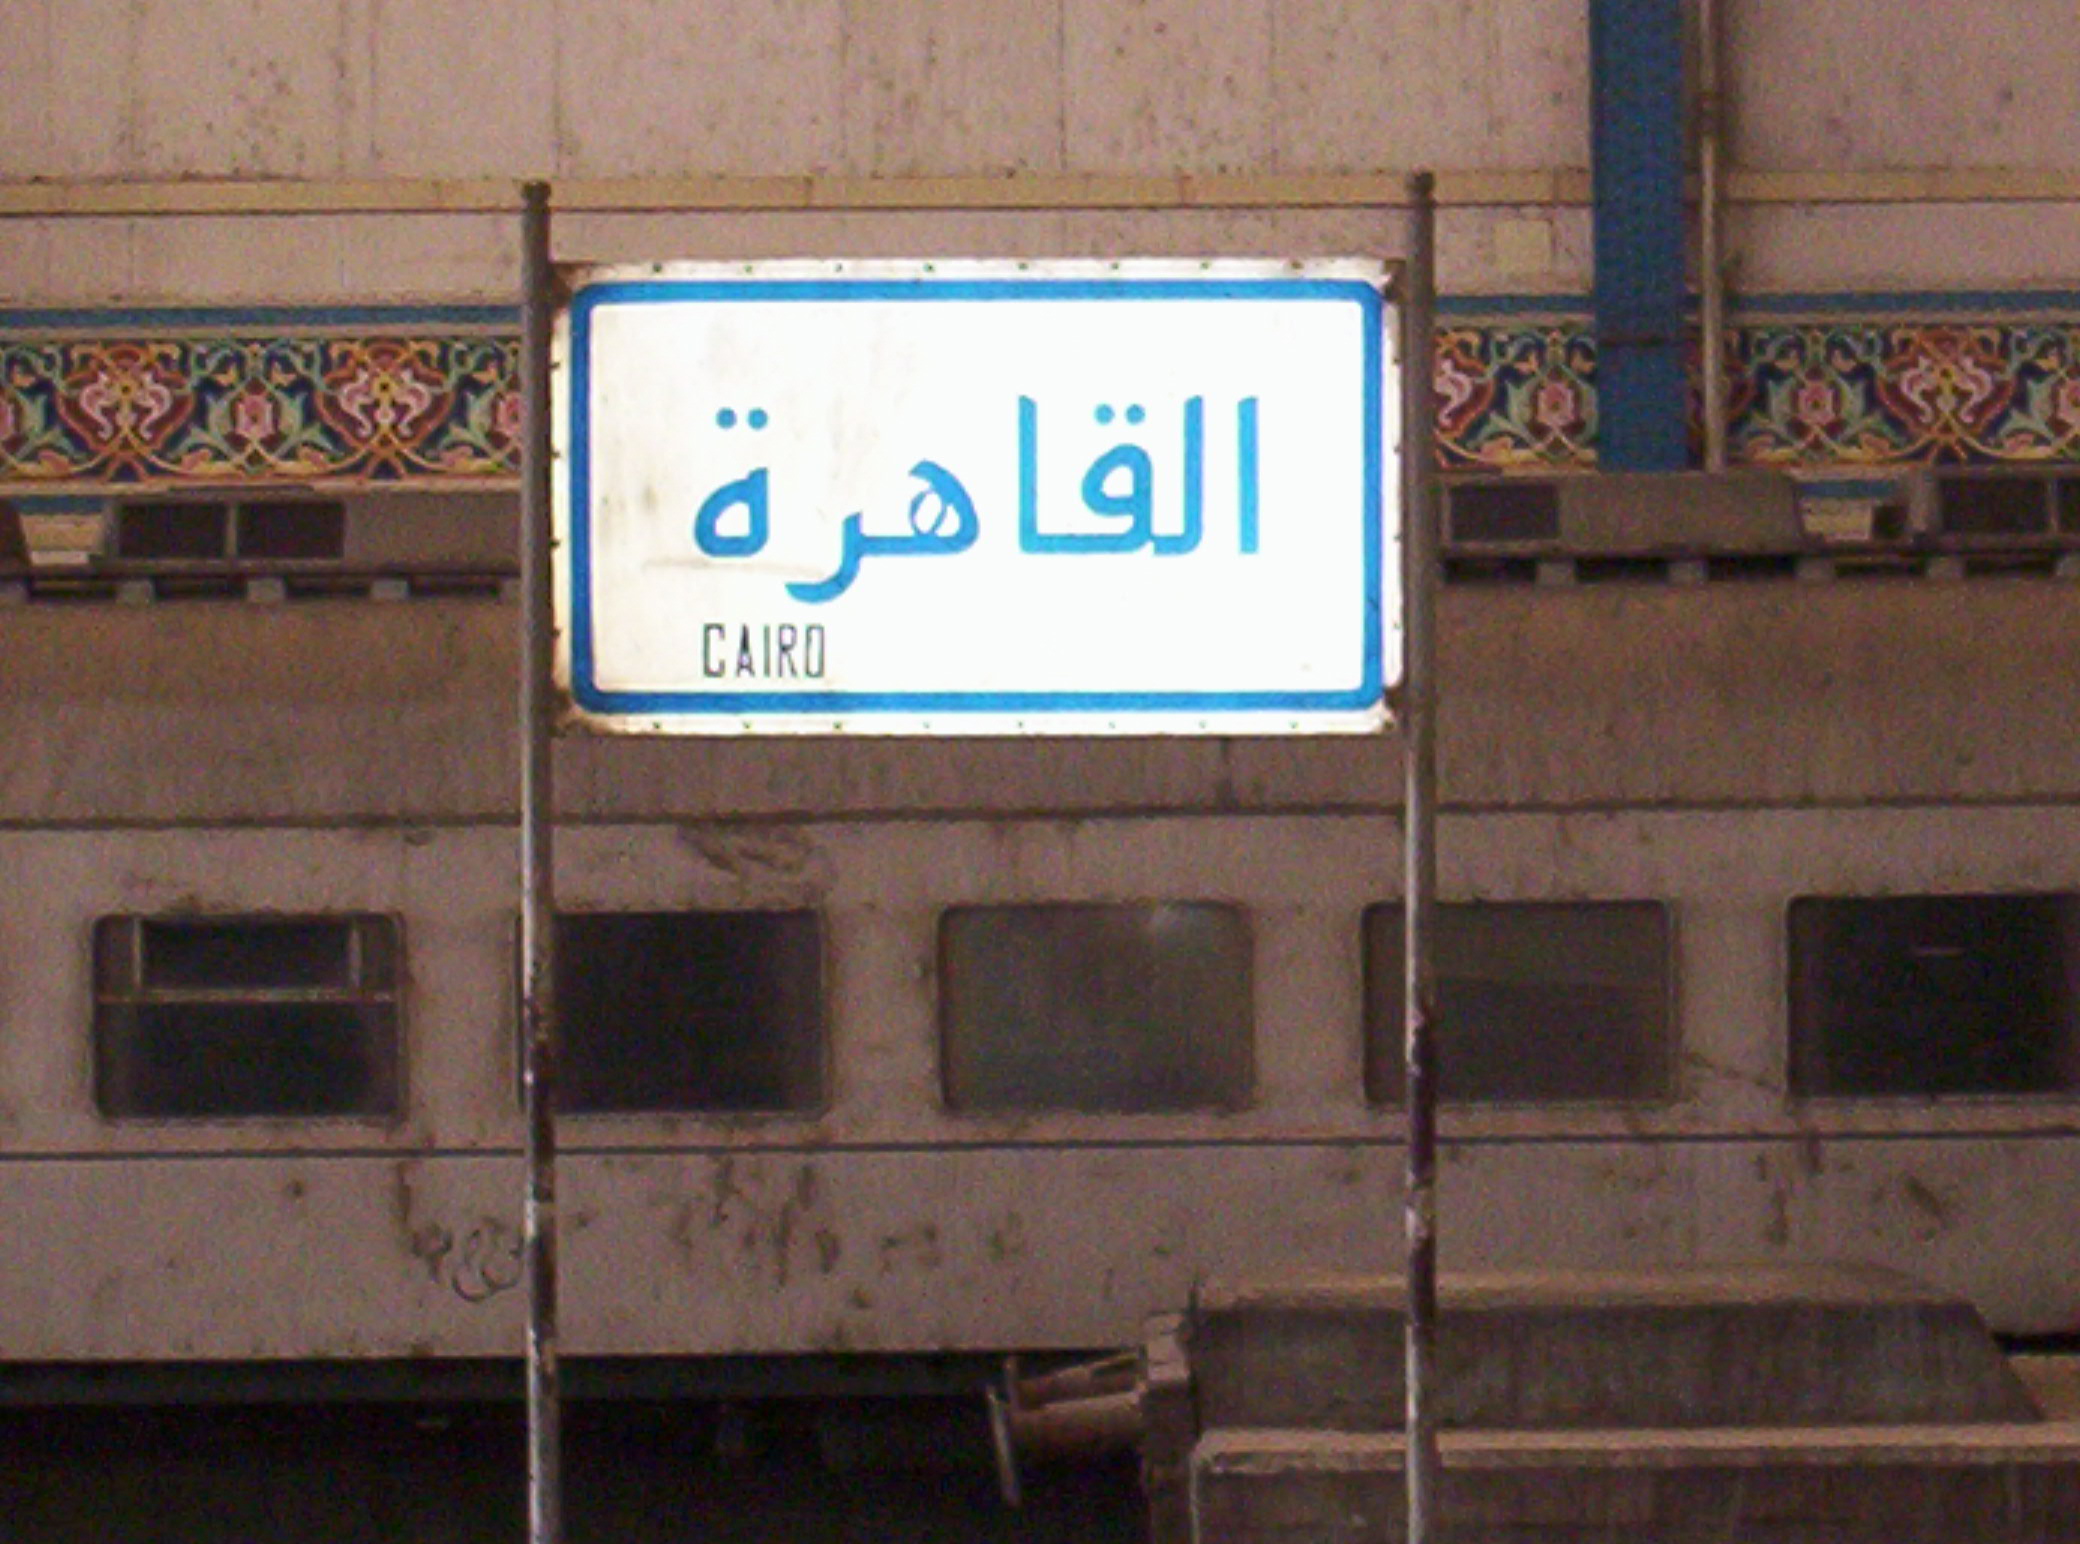 Station Cairo